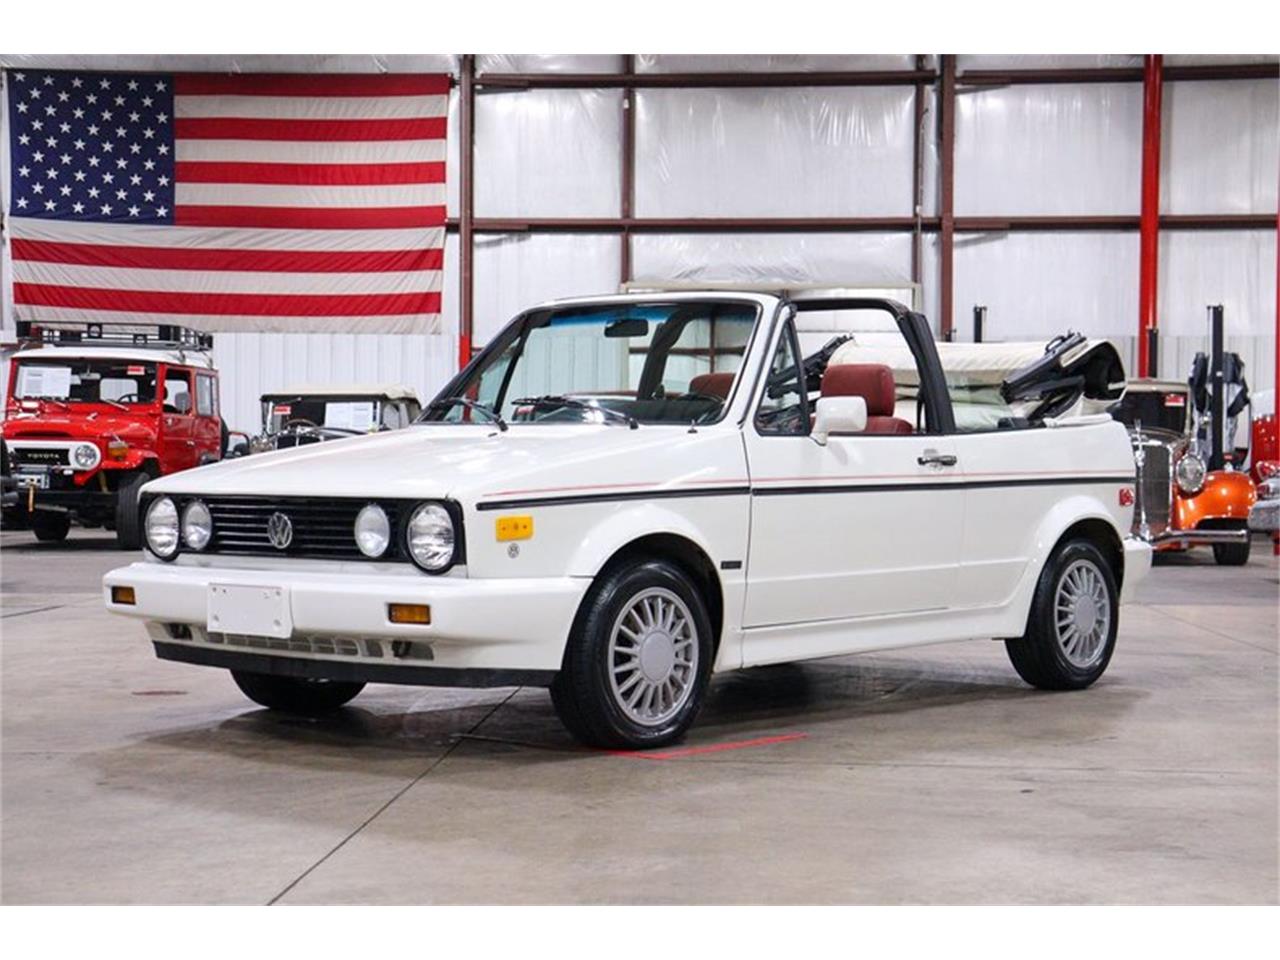 For Sale: 1989 Volkswagen Golf in Ken2od, Michigan for sale in Grand Rapids, MI